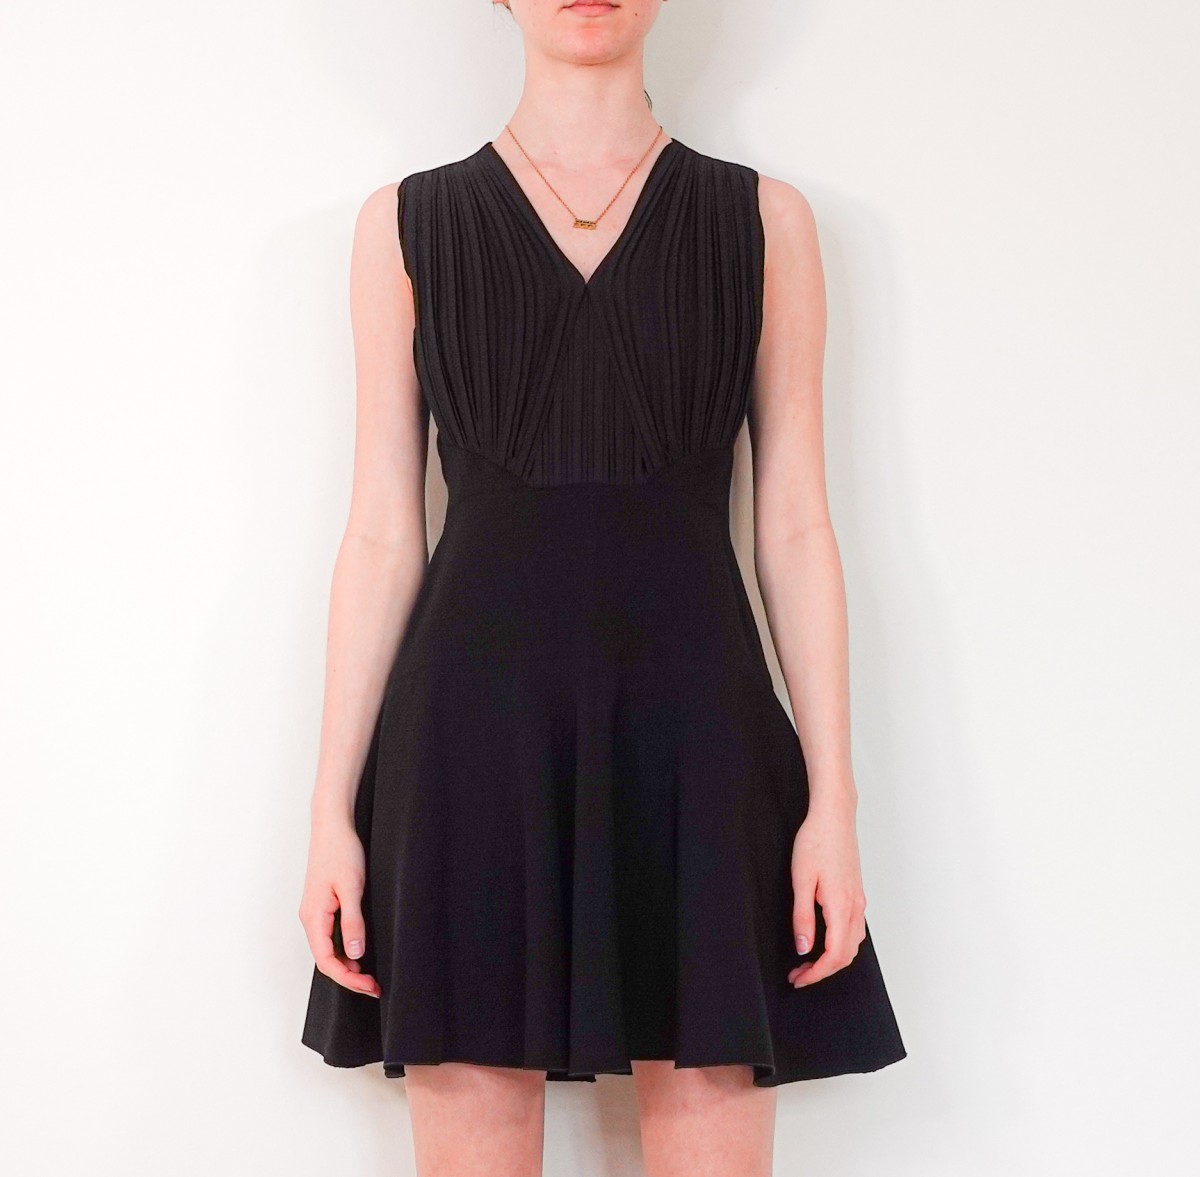 RELOVED AGAIN | Victoria Beckham mini black dress XS RRP £700